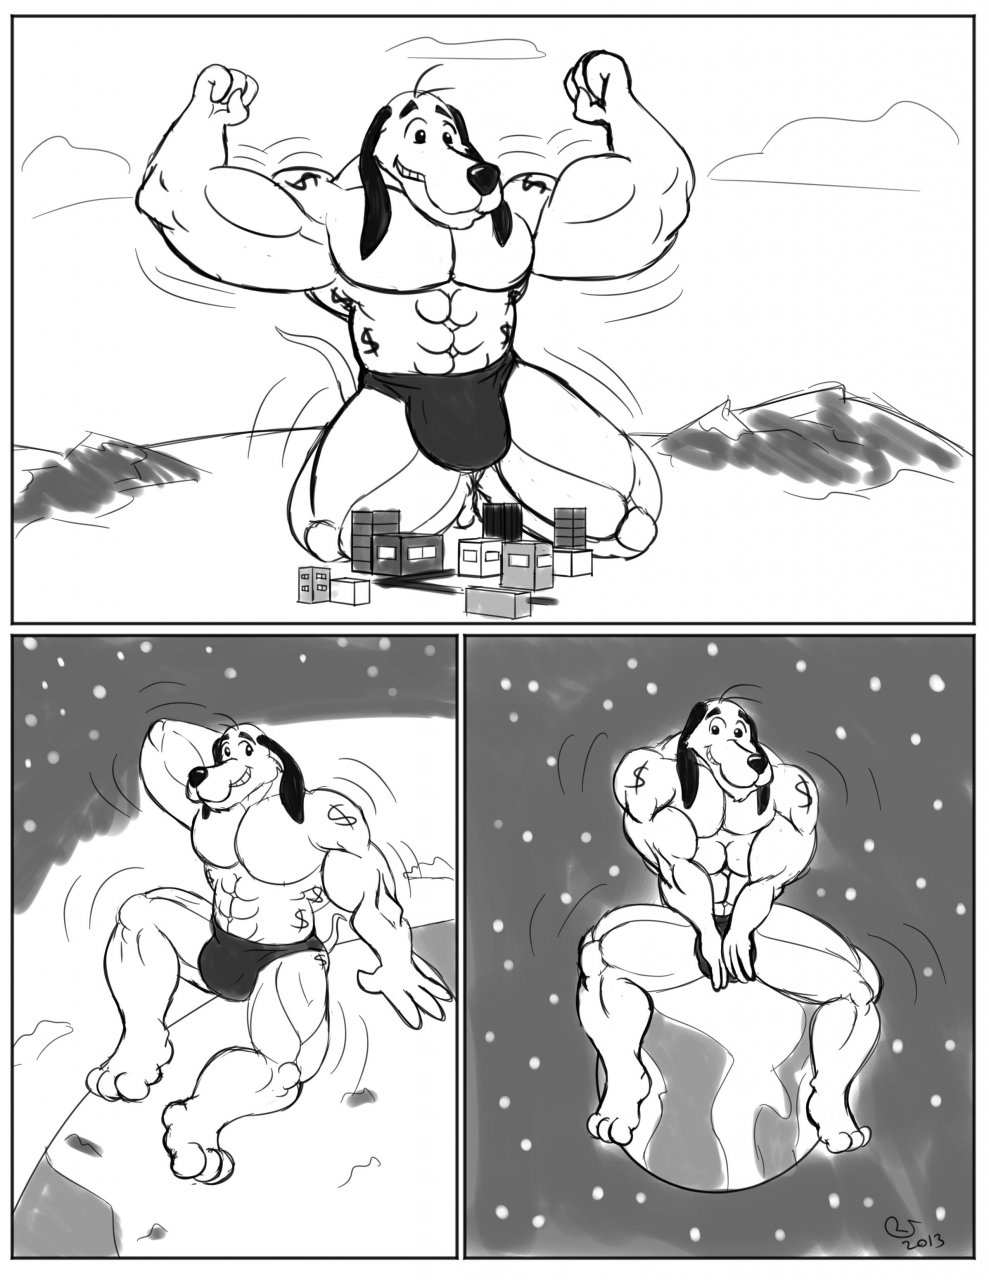 Dollar Muscle Max Comic Page 4/5 by CaseyLJones